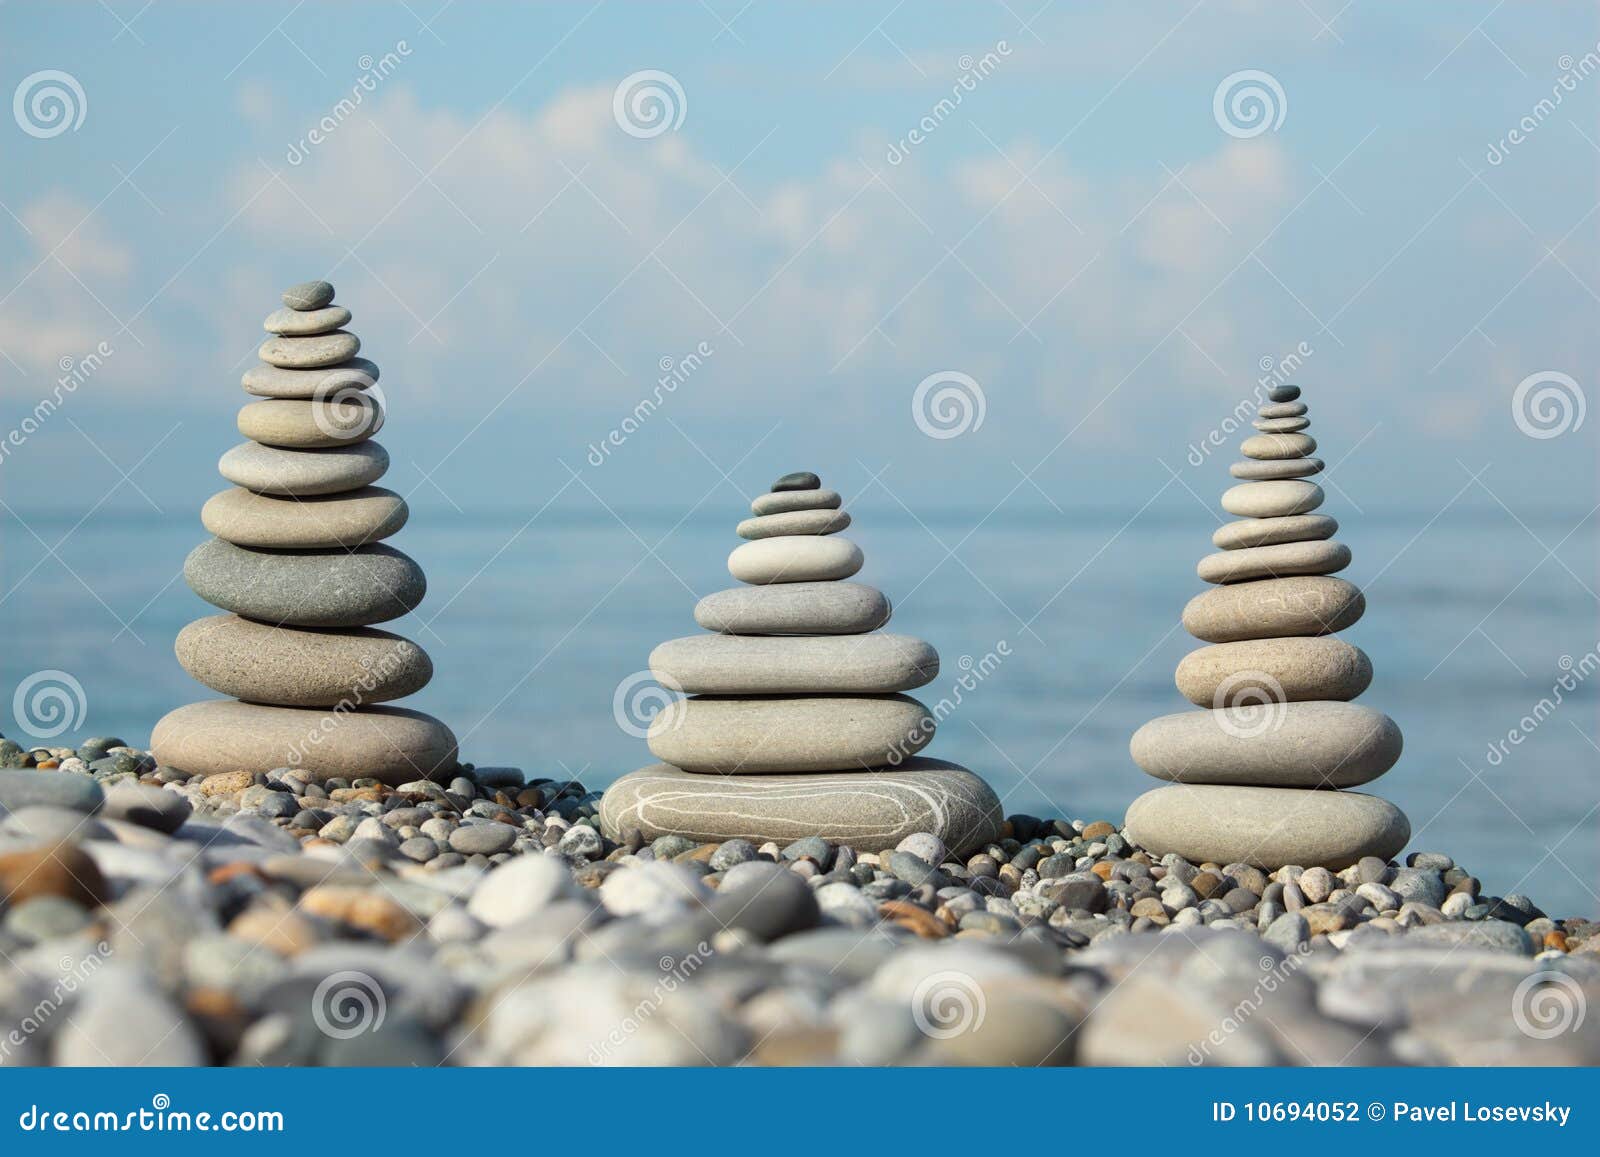 three stone stacks on pebble beach